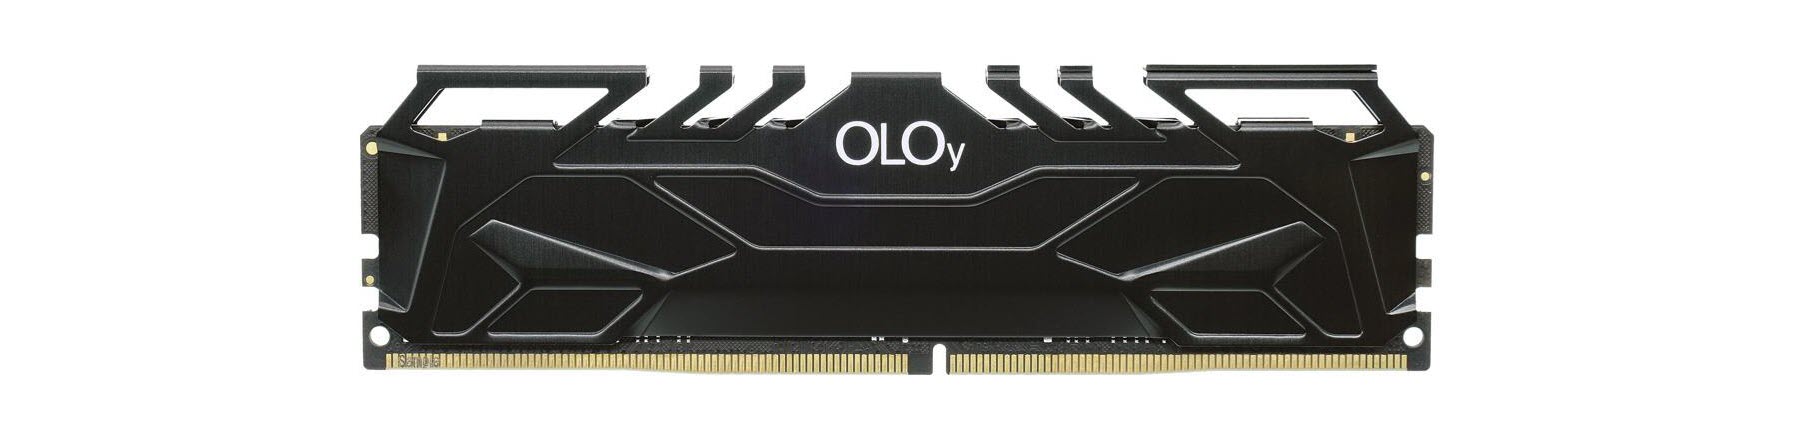 OLOy DDR4 module in black color